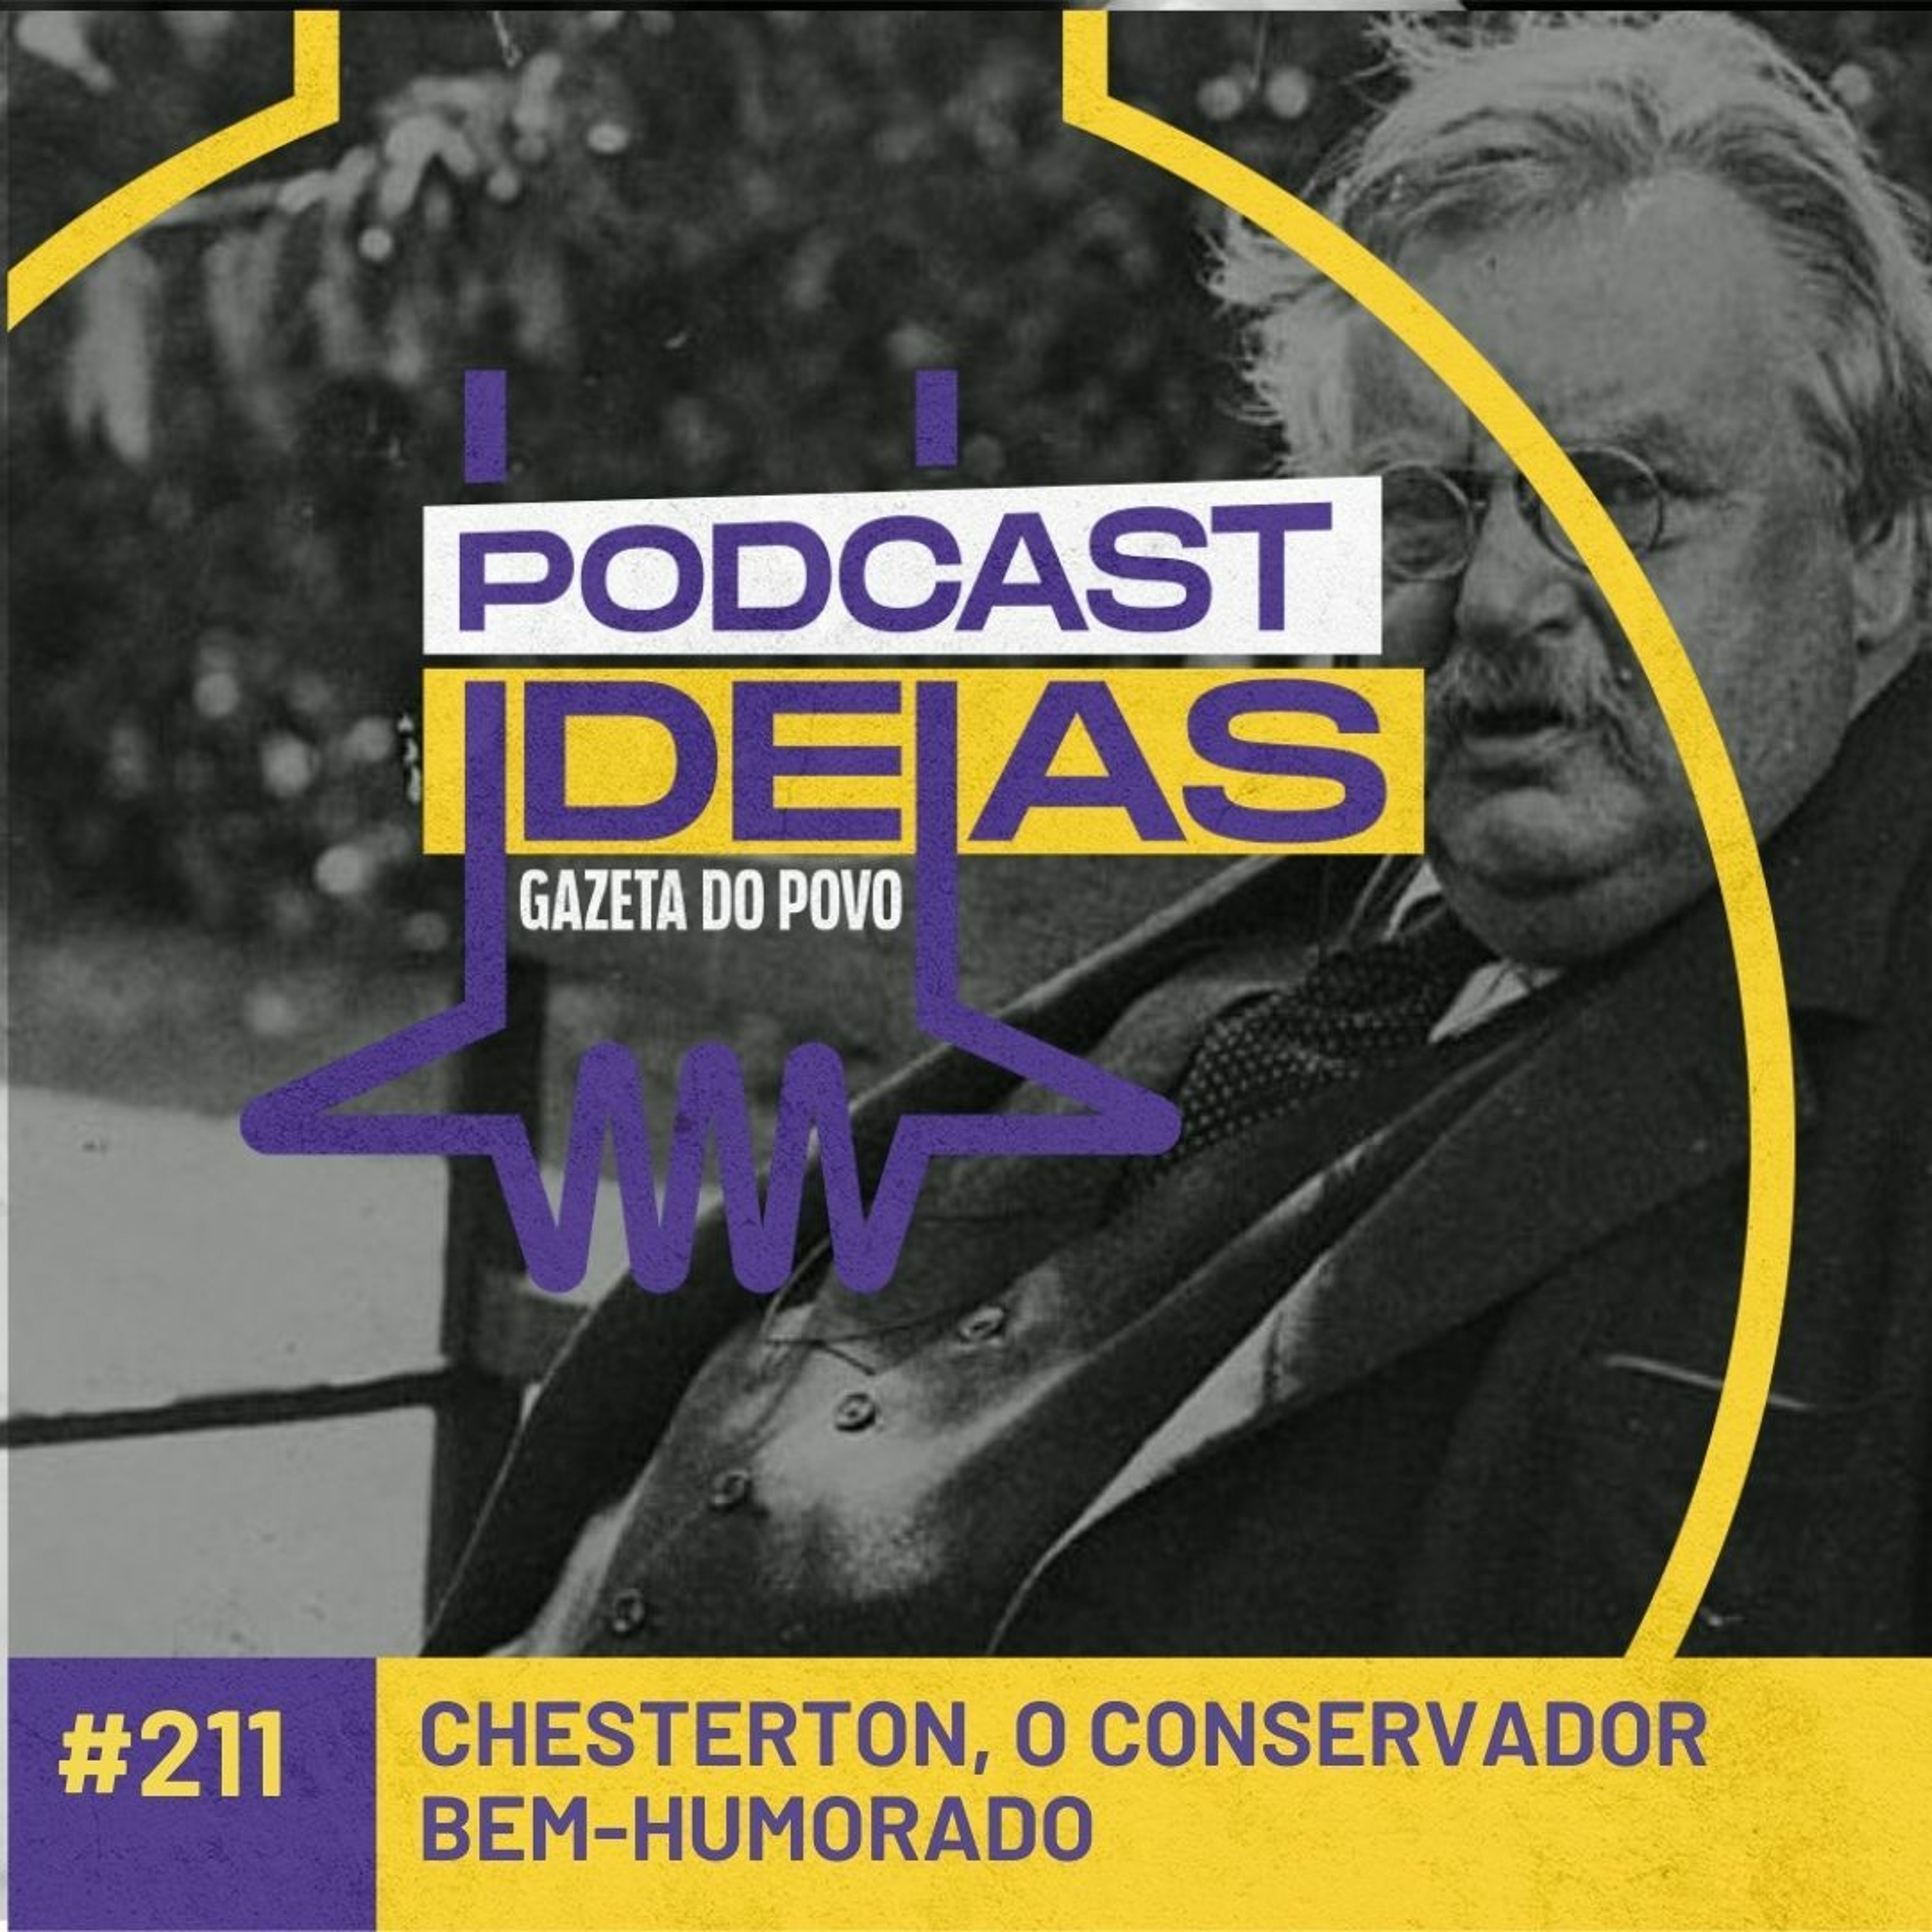 Ideias #211 - O conservadorismo bem-humorado de G. K. Chesterton